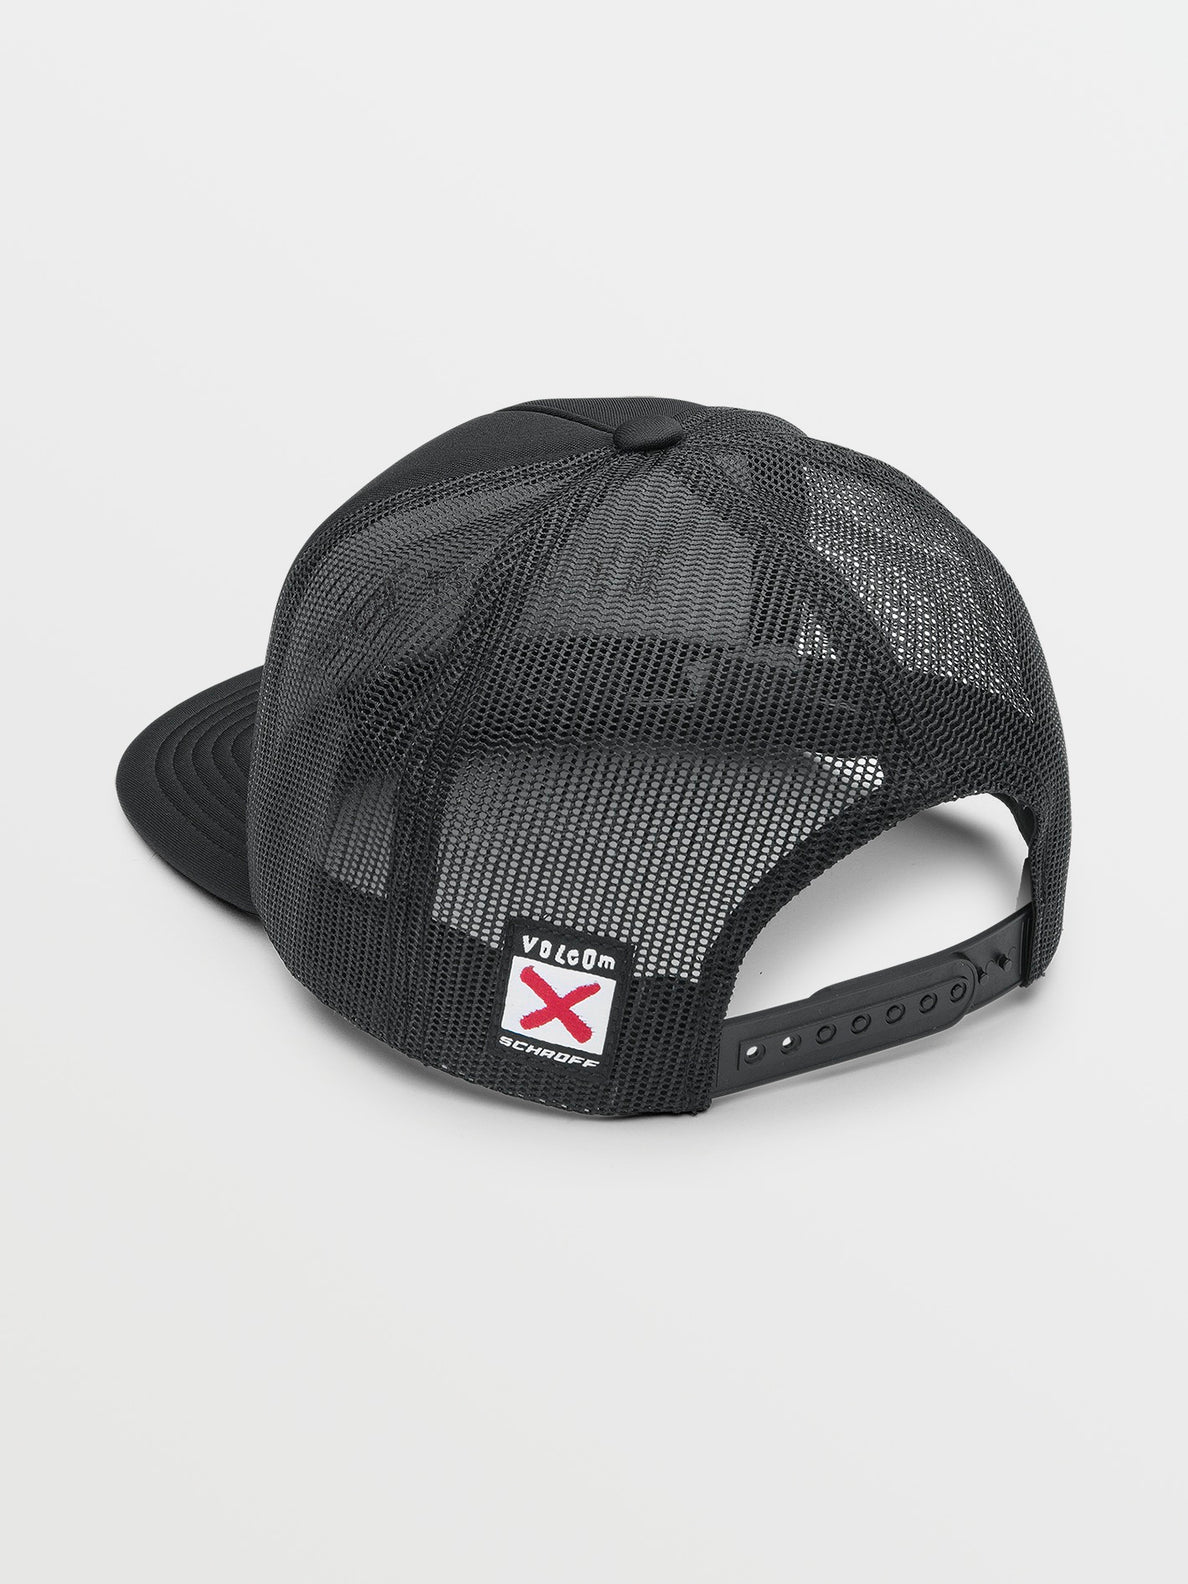 Schroff X Volcom Cheese Hat - Black – Volcom Japan